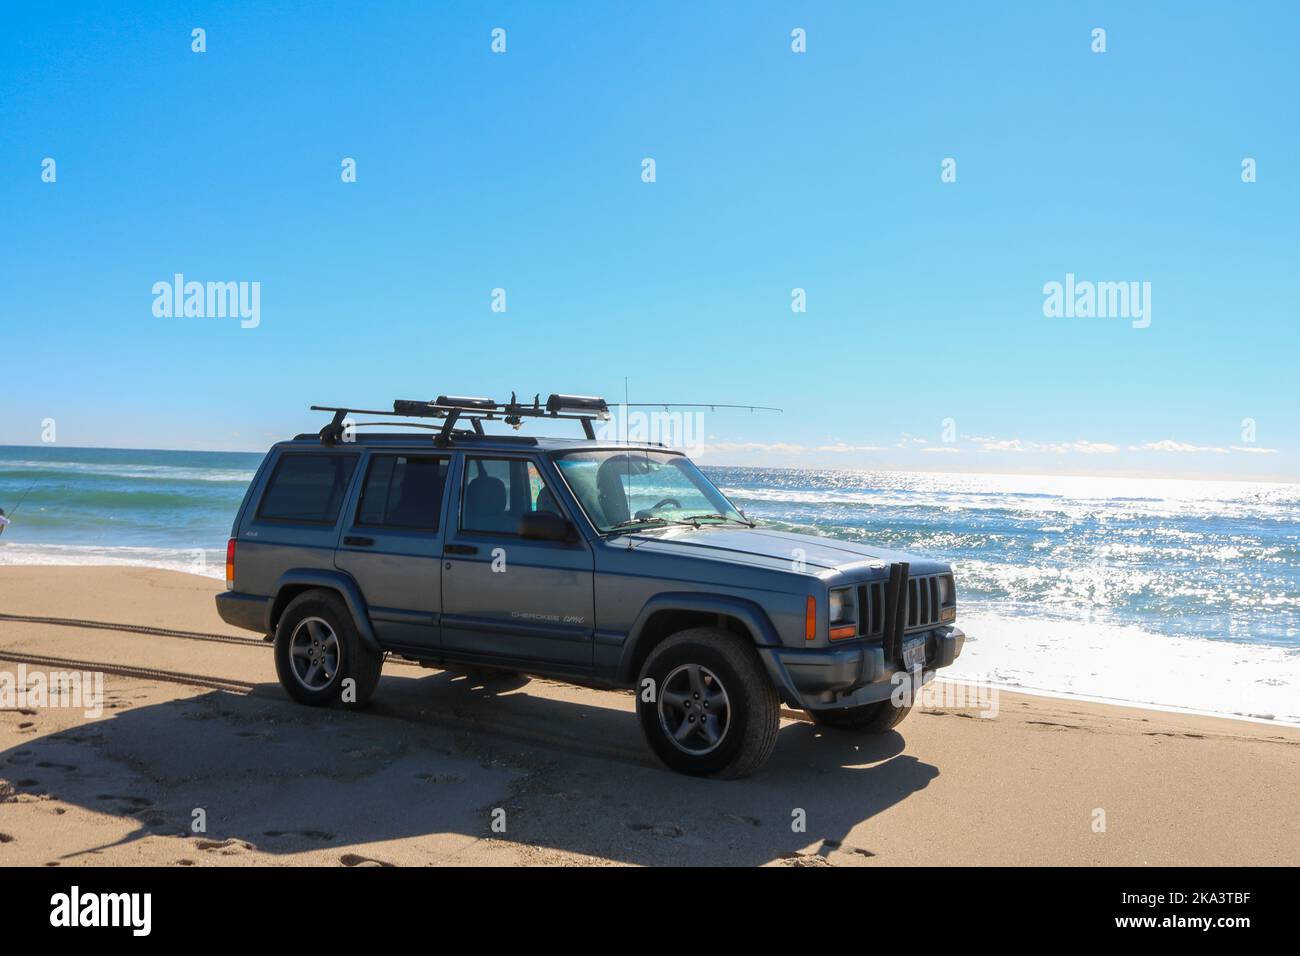 https://c8.alamy.com/comp/2KA3TBF/the-jeep-cherokee-driving-on-a-sunny-beach-next-to-the-ocean-with-fishing-rods-on-the-roof-montauk-2KA3TBF.jpg